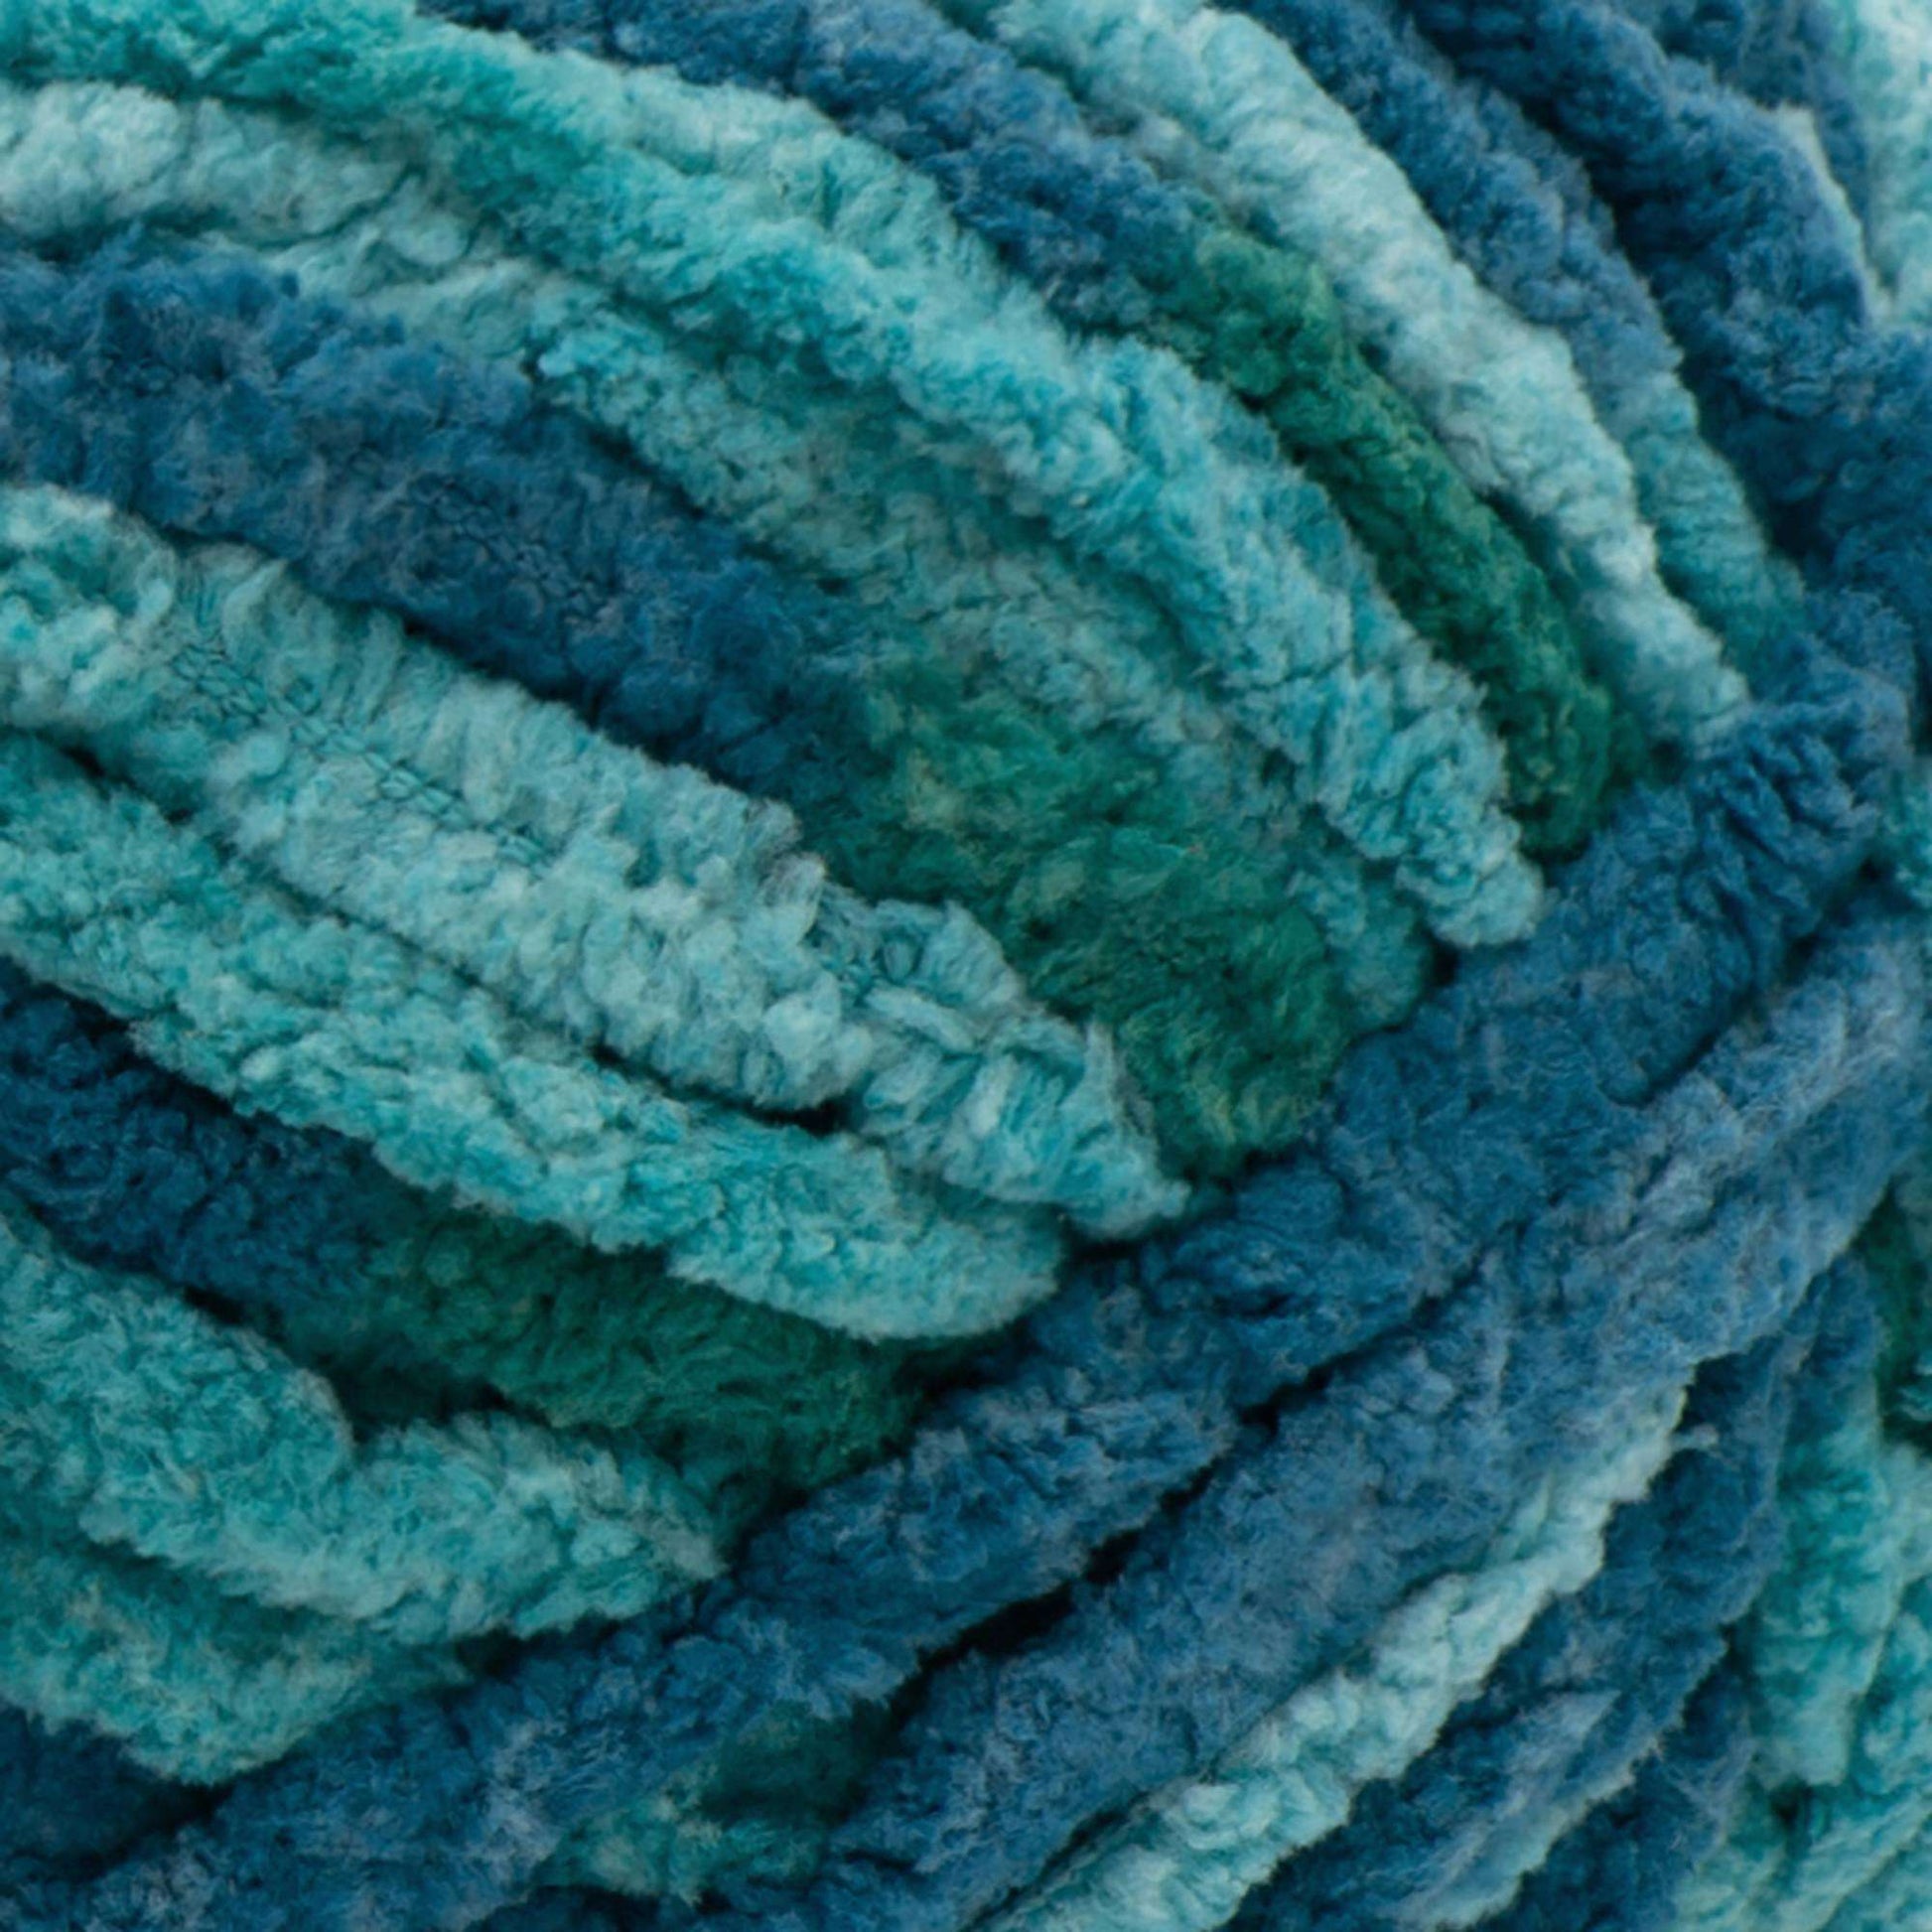 Bernat Blanket Yarn - Discontinued Shades